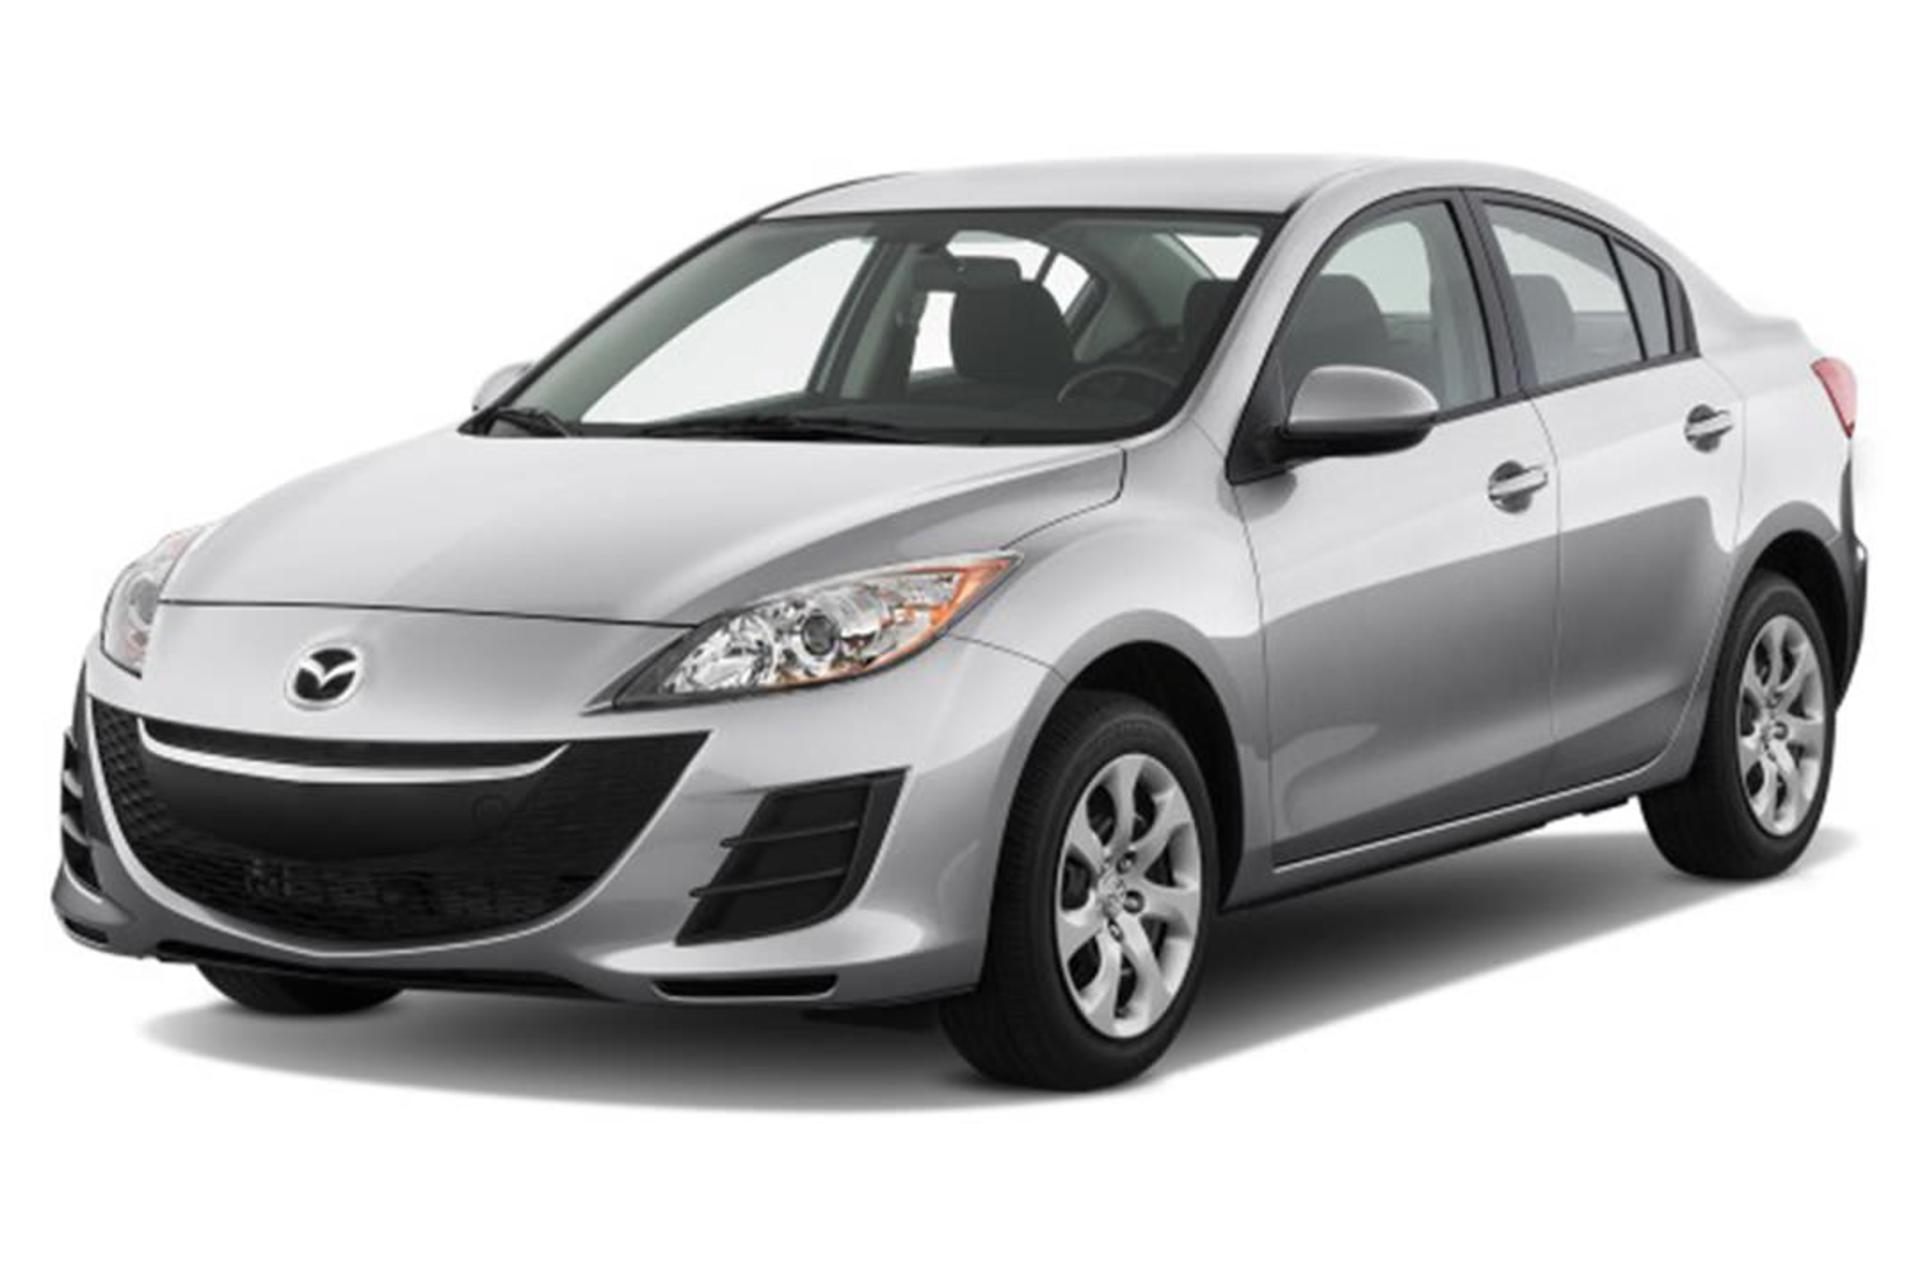 مرجع متخصصين ايران Mazda 3 New Faclift 2010  / مزدا ۳ نيو فيس ليفت